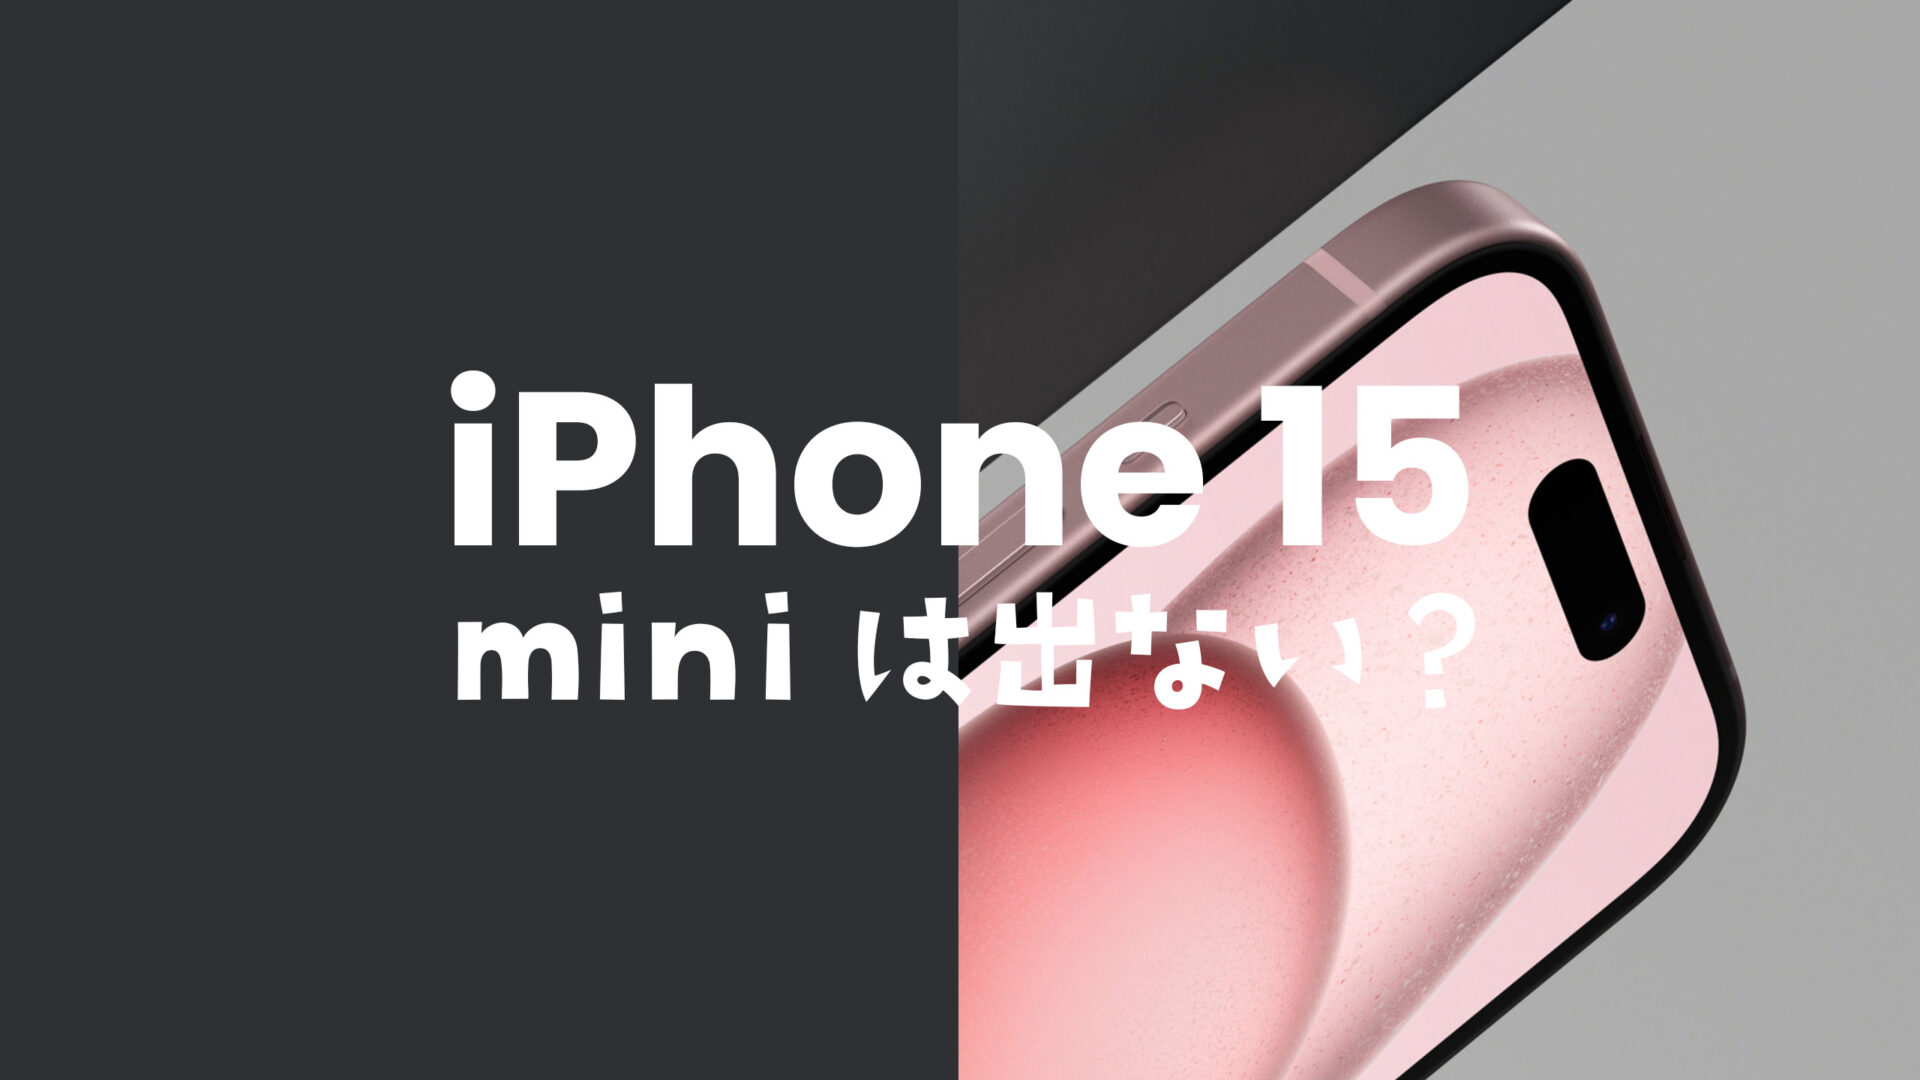 iPhone15 miniは今年も発売されない。ラインナップから廃止なのか。のサムネイル画像